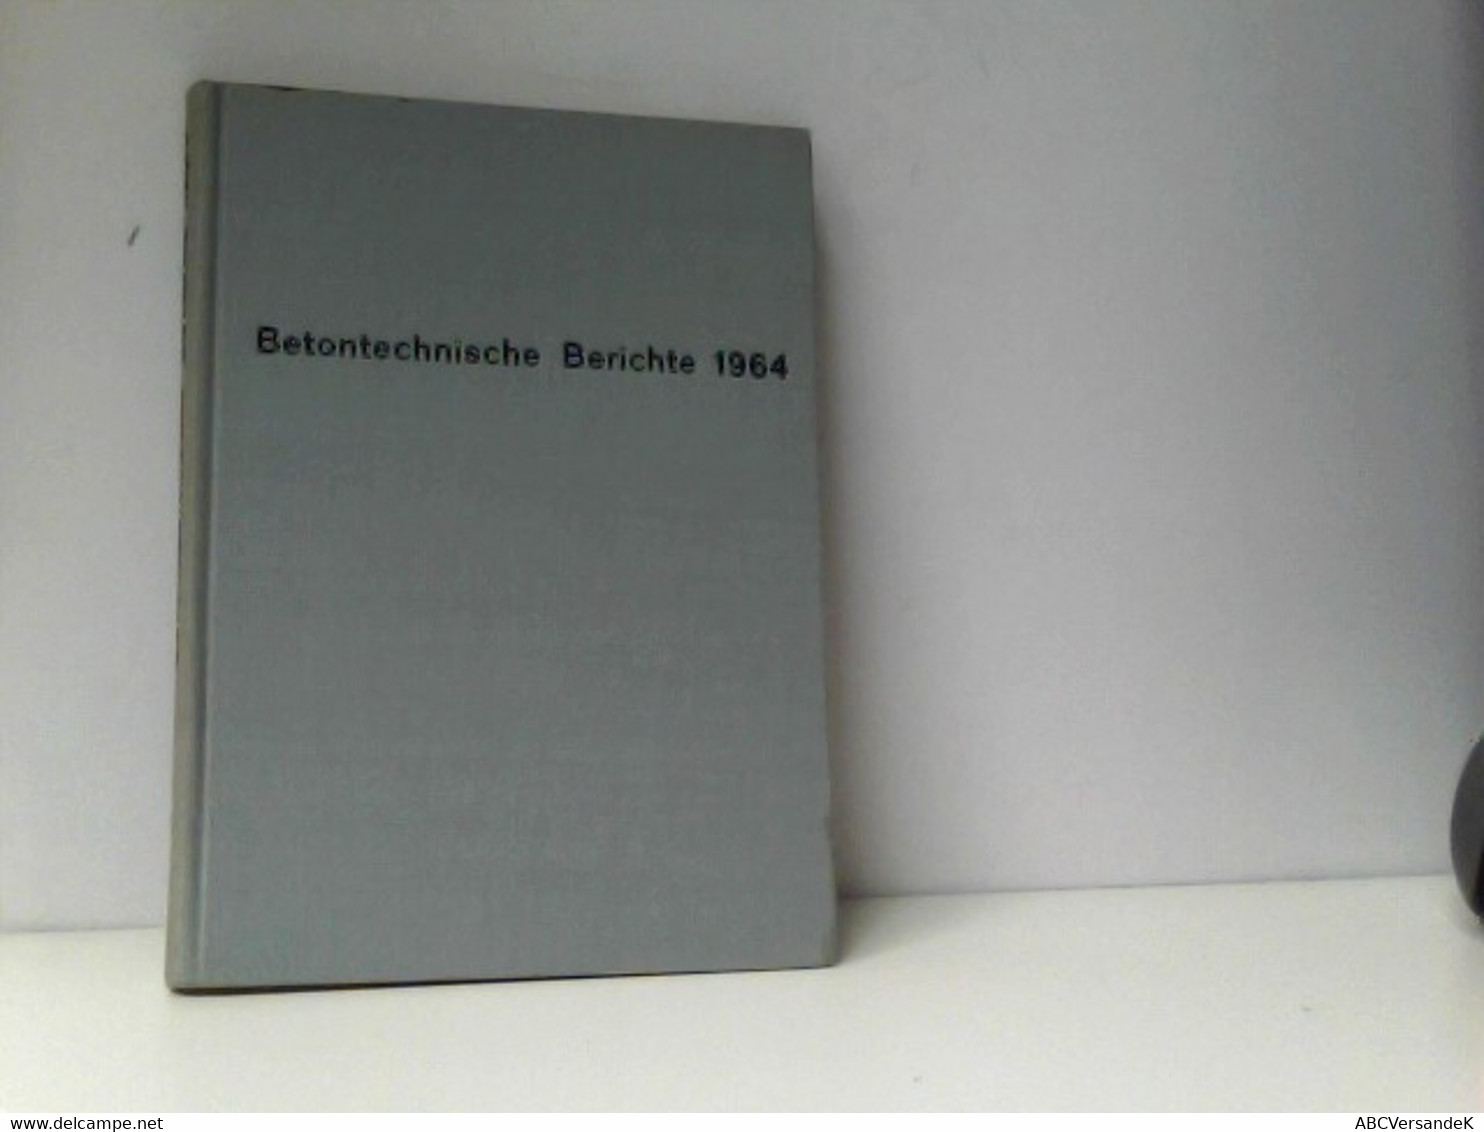 Betontechnische Berichte 1964 - Technical